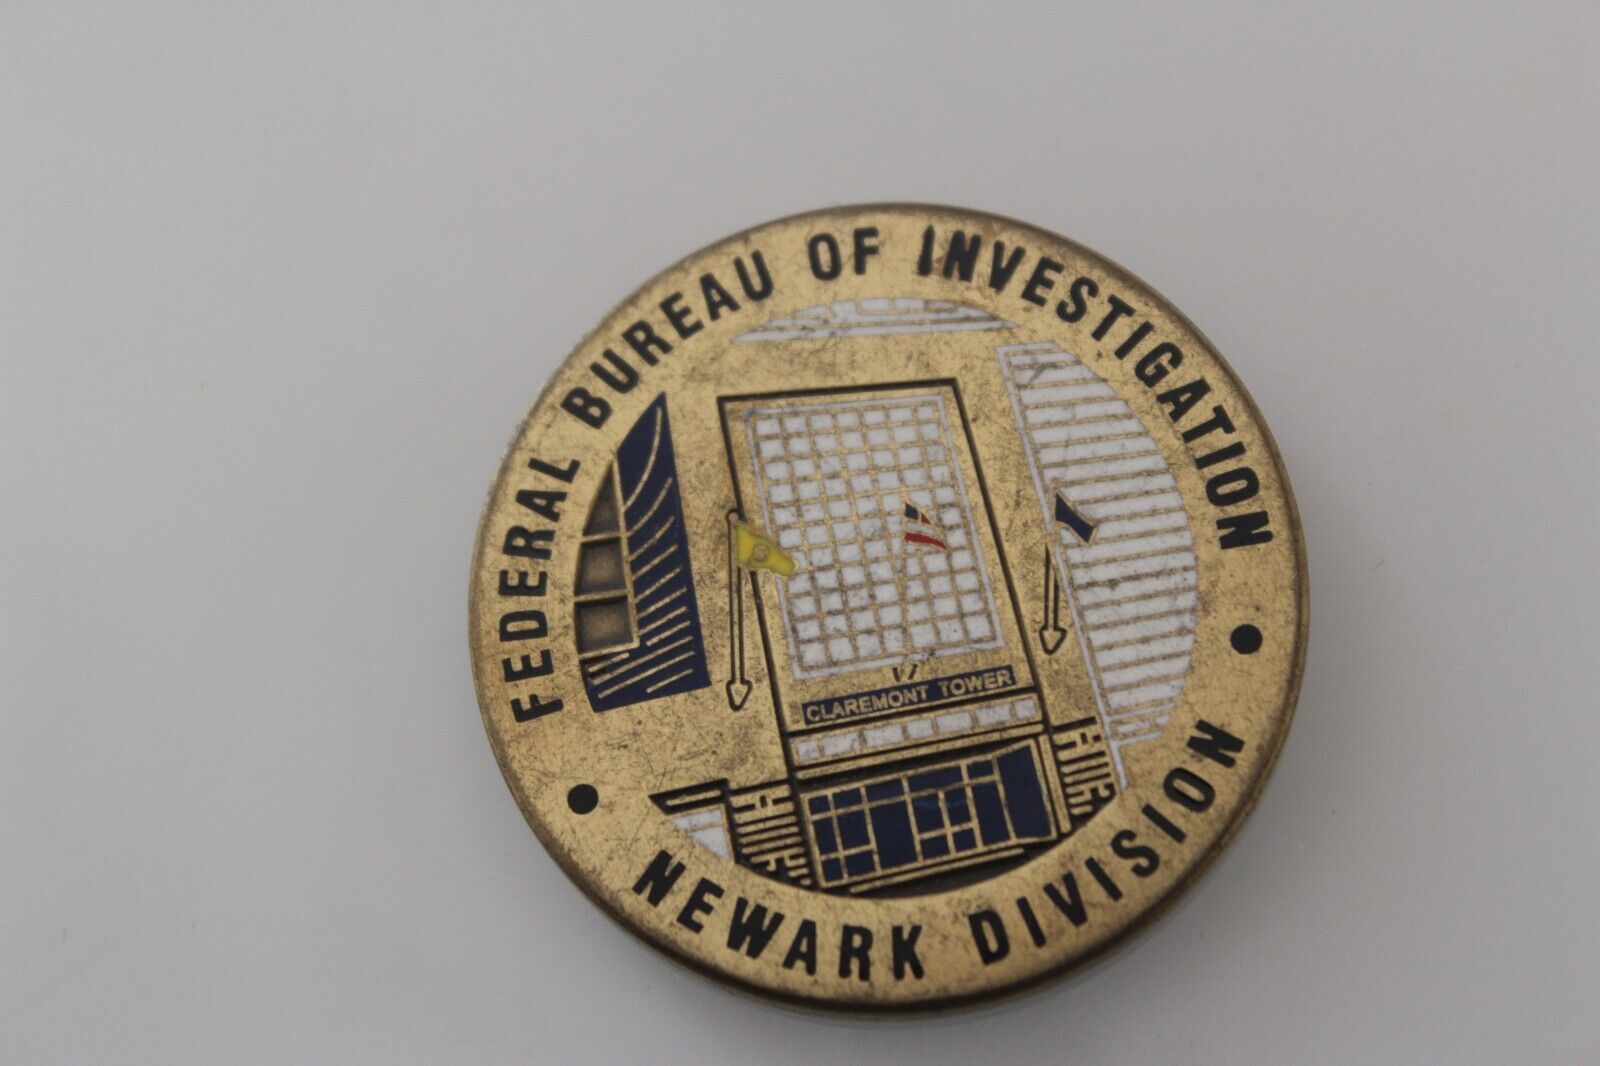 FBI Newark Division Challenge Coin